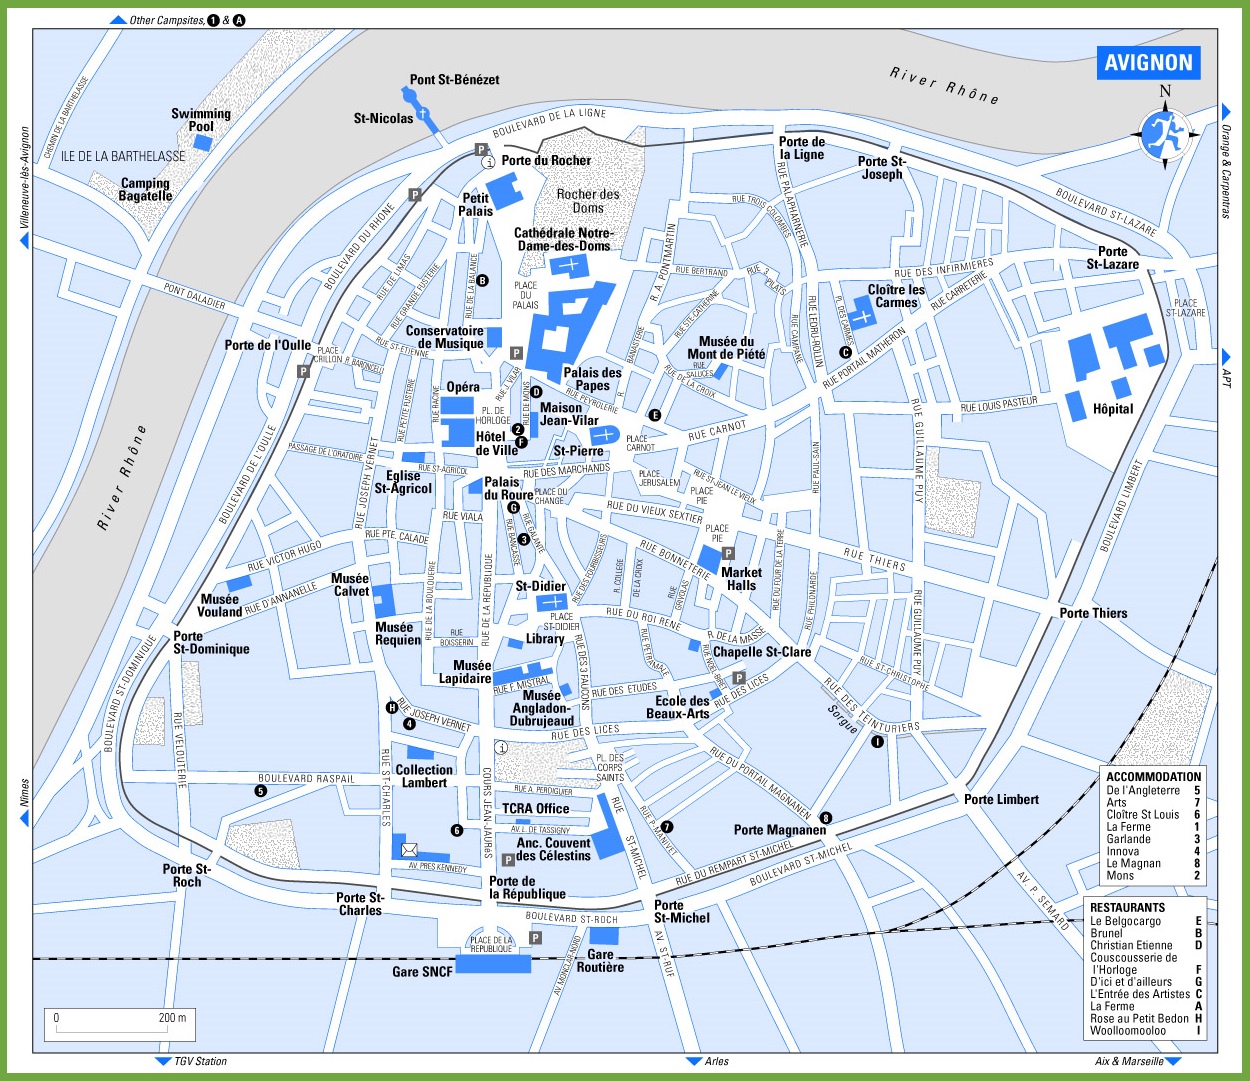 Avignon Travel Map 